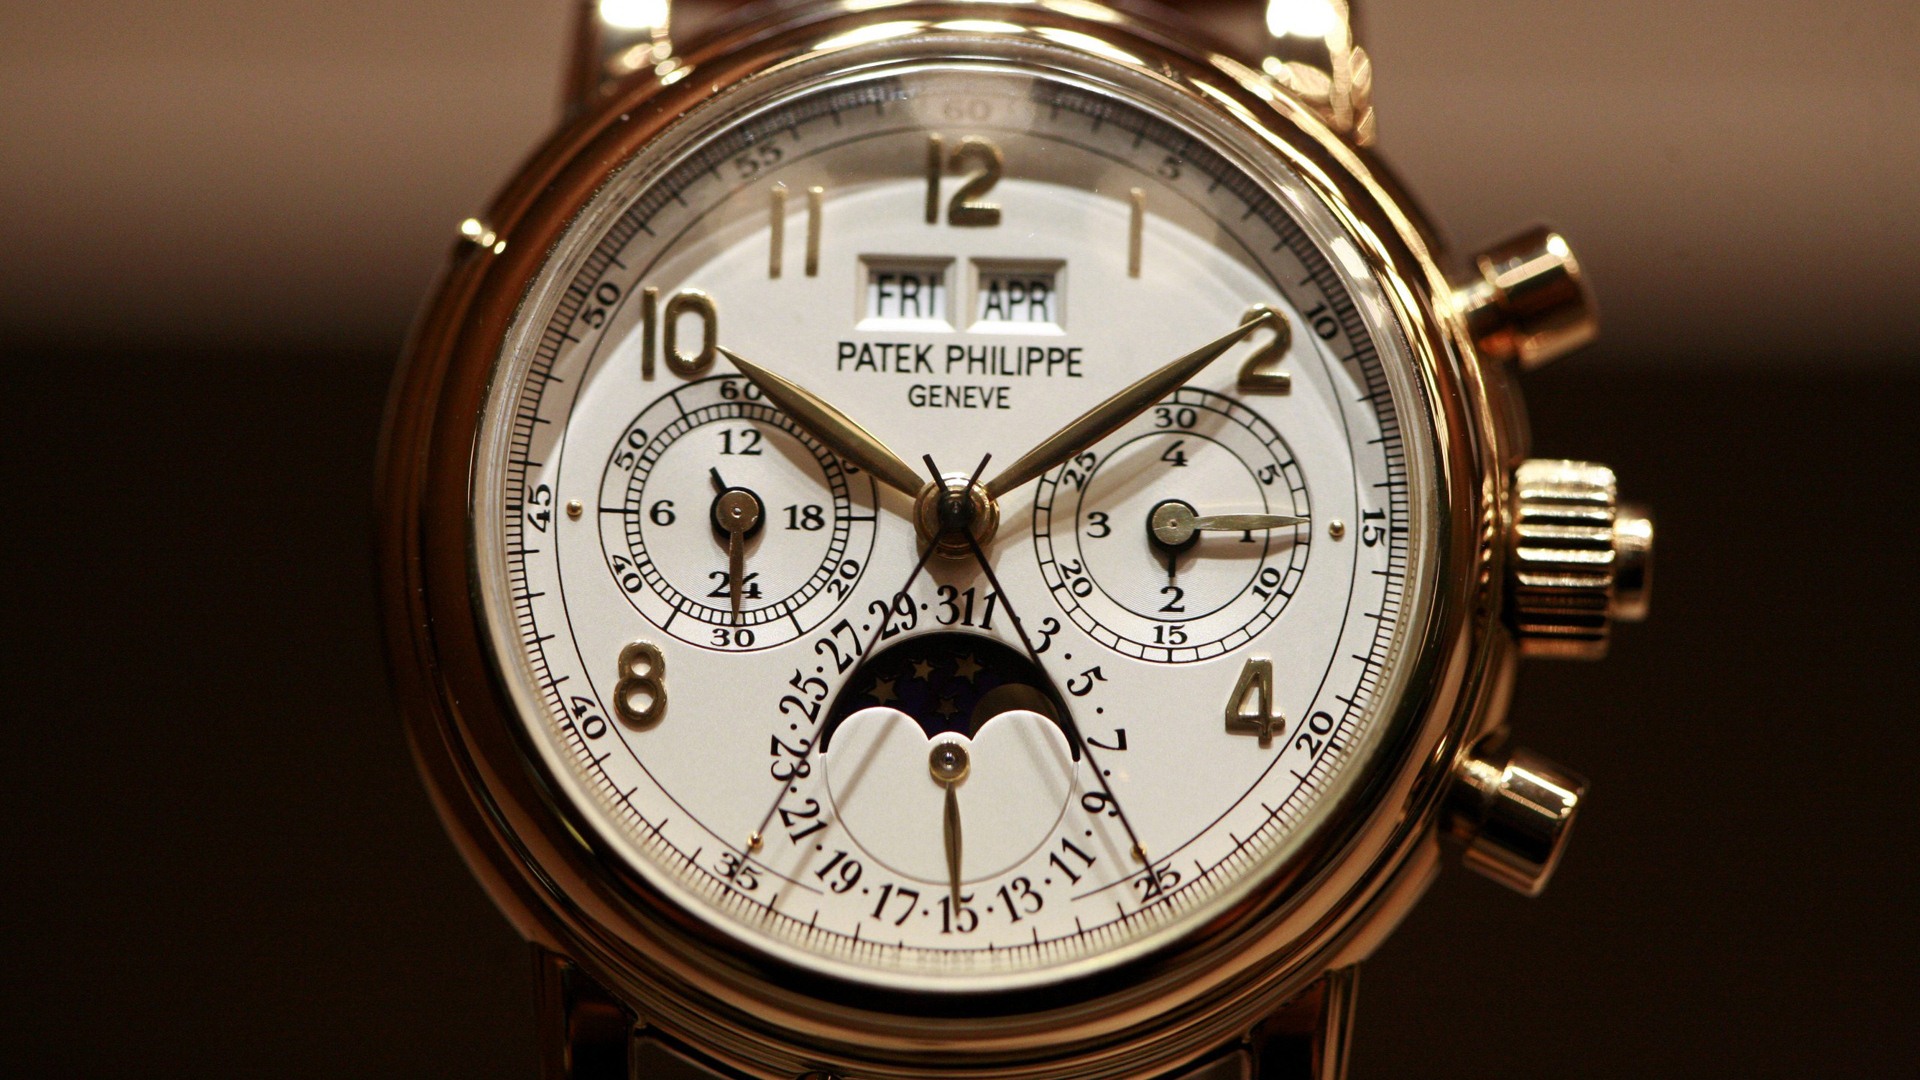 Fondos de relojes famosos del Mundo (1) #7 - 1920x1080